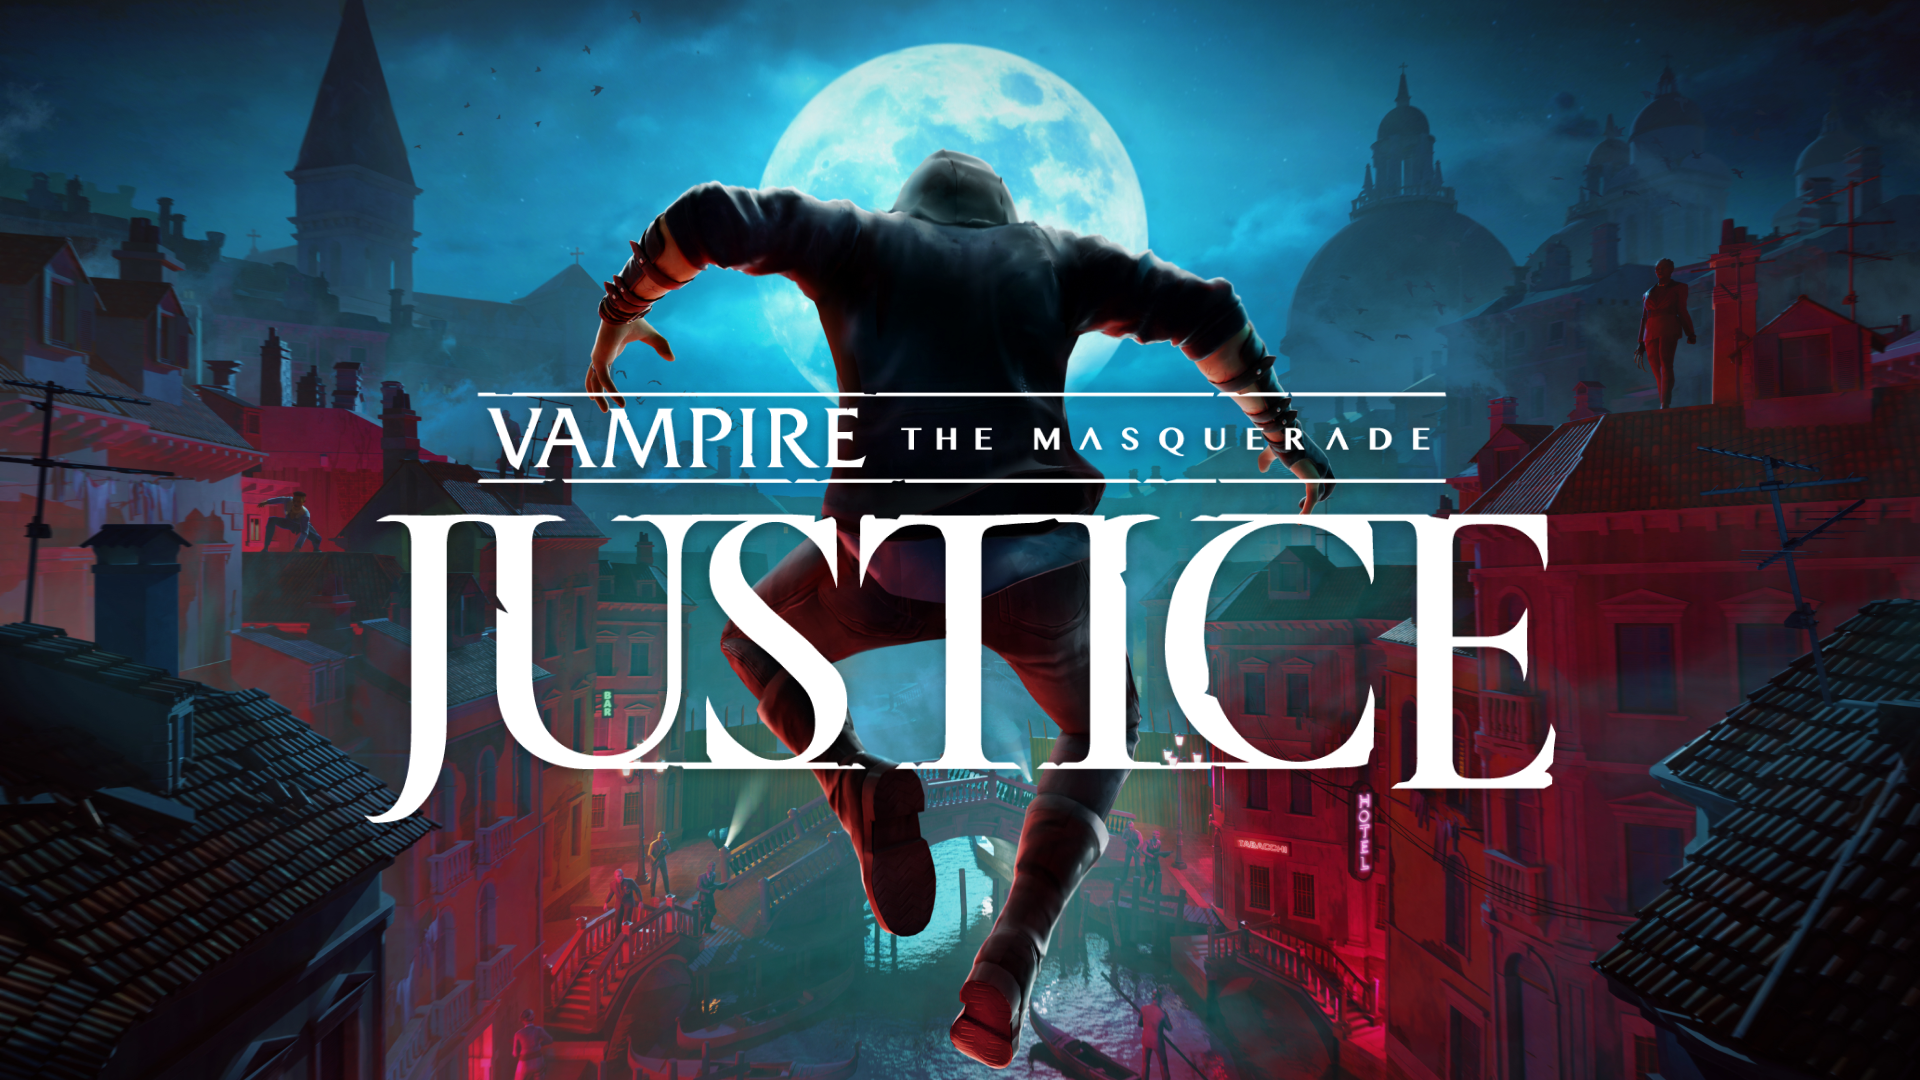 Vampire: The Masquerade: Justice